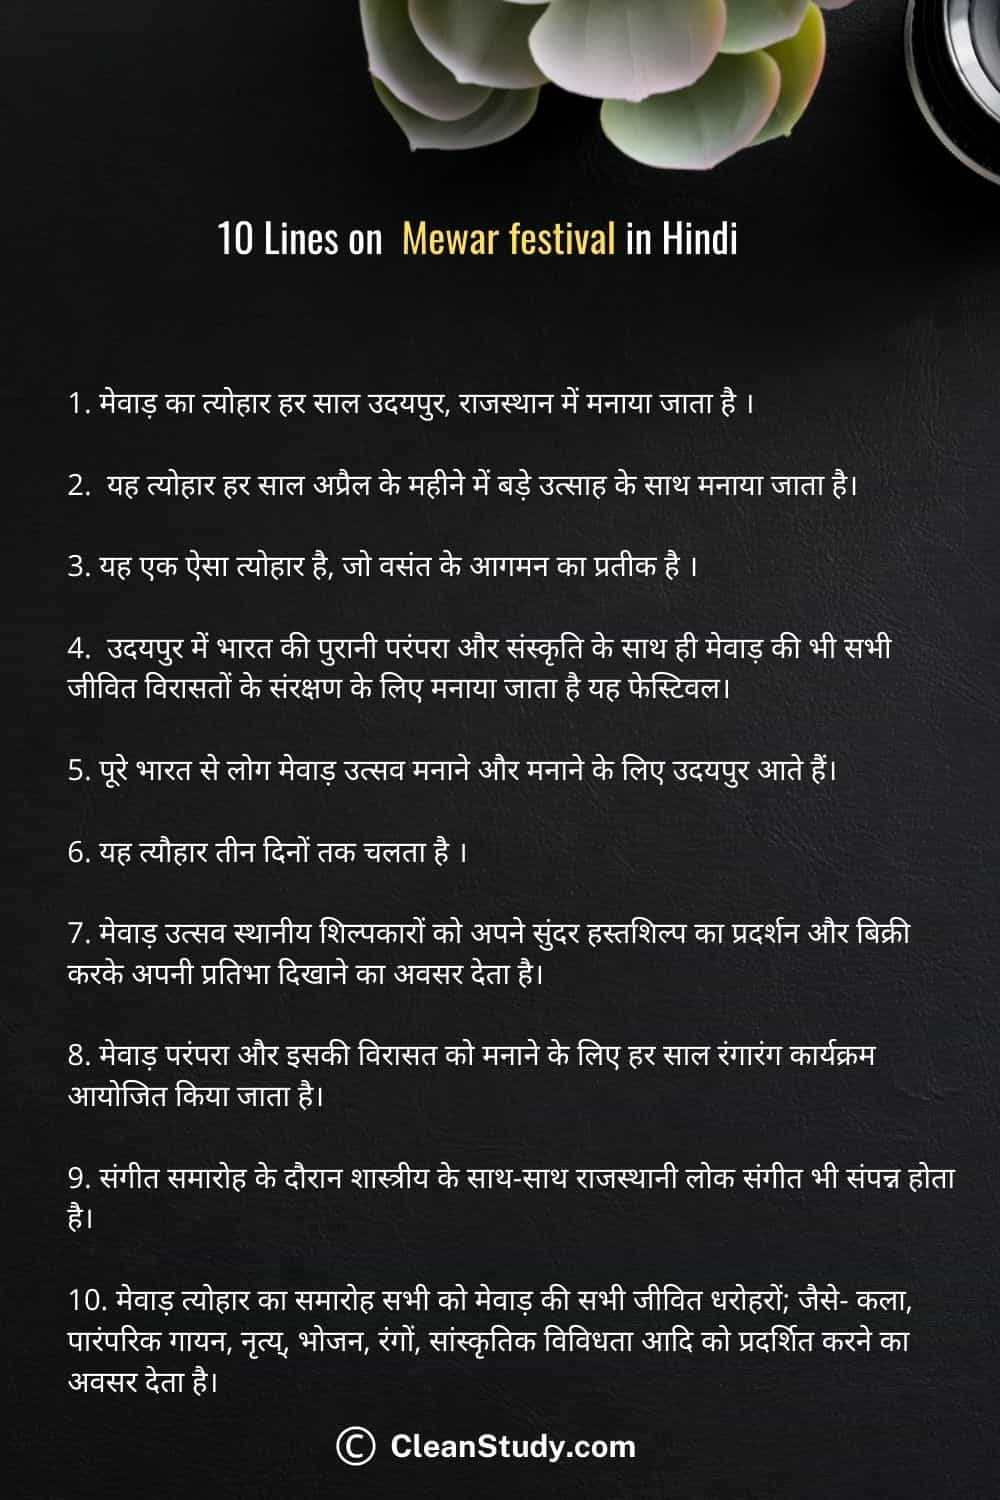 10 Lines on Mewar festival in Hindi